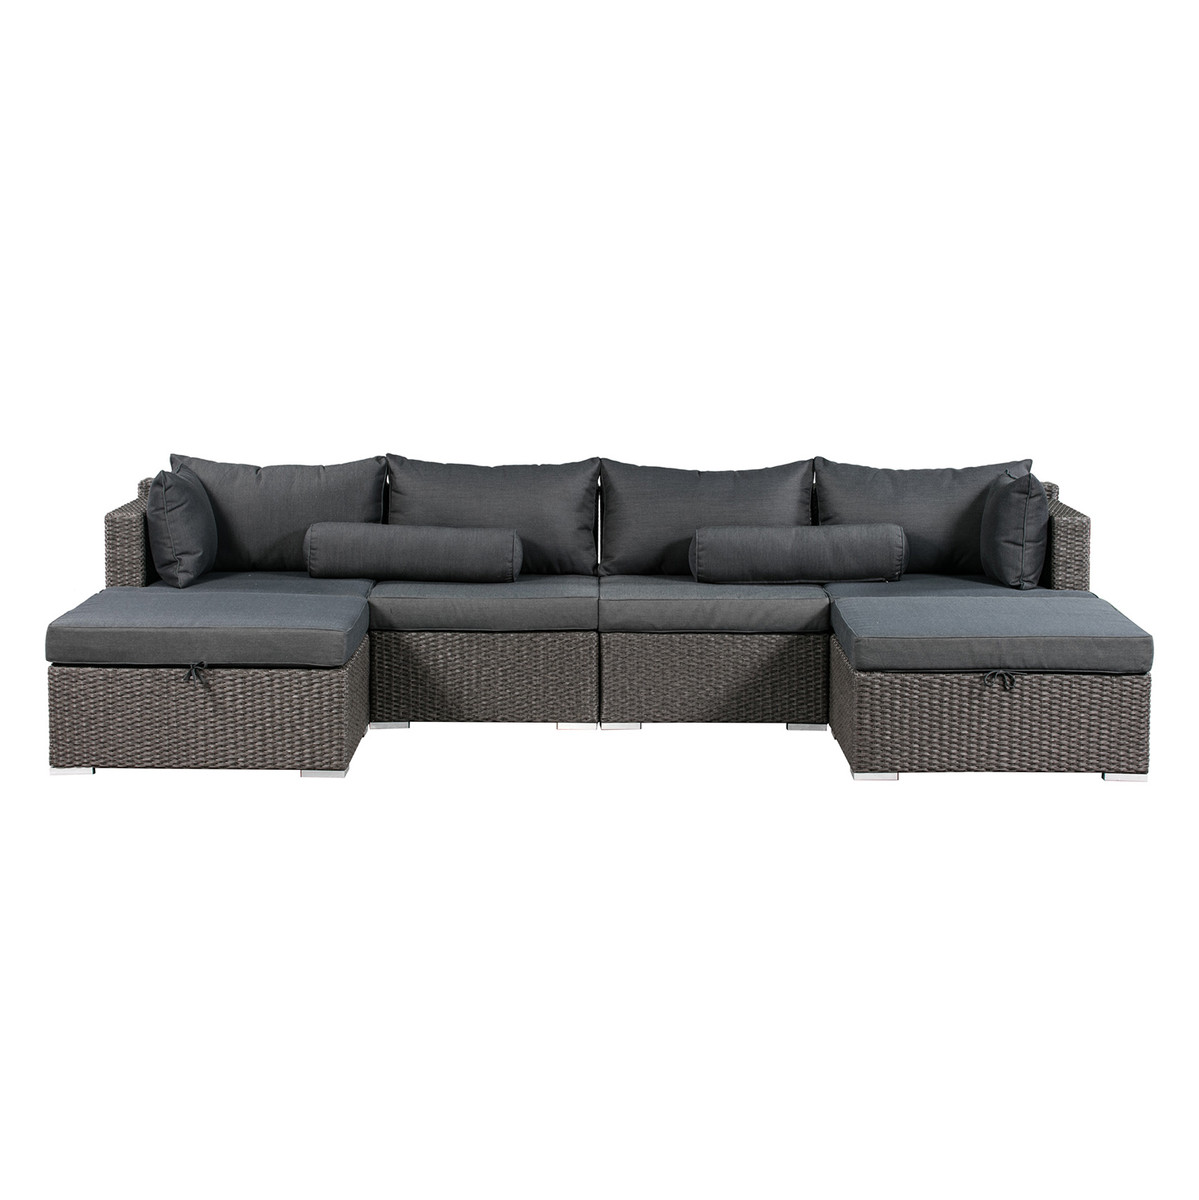 Patioflare Sarah Sectional Set, Grey Wicker & Dark Grey Cushions